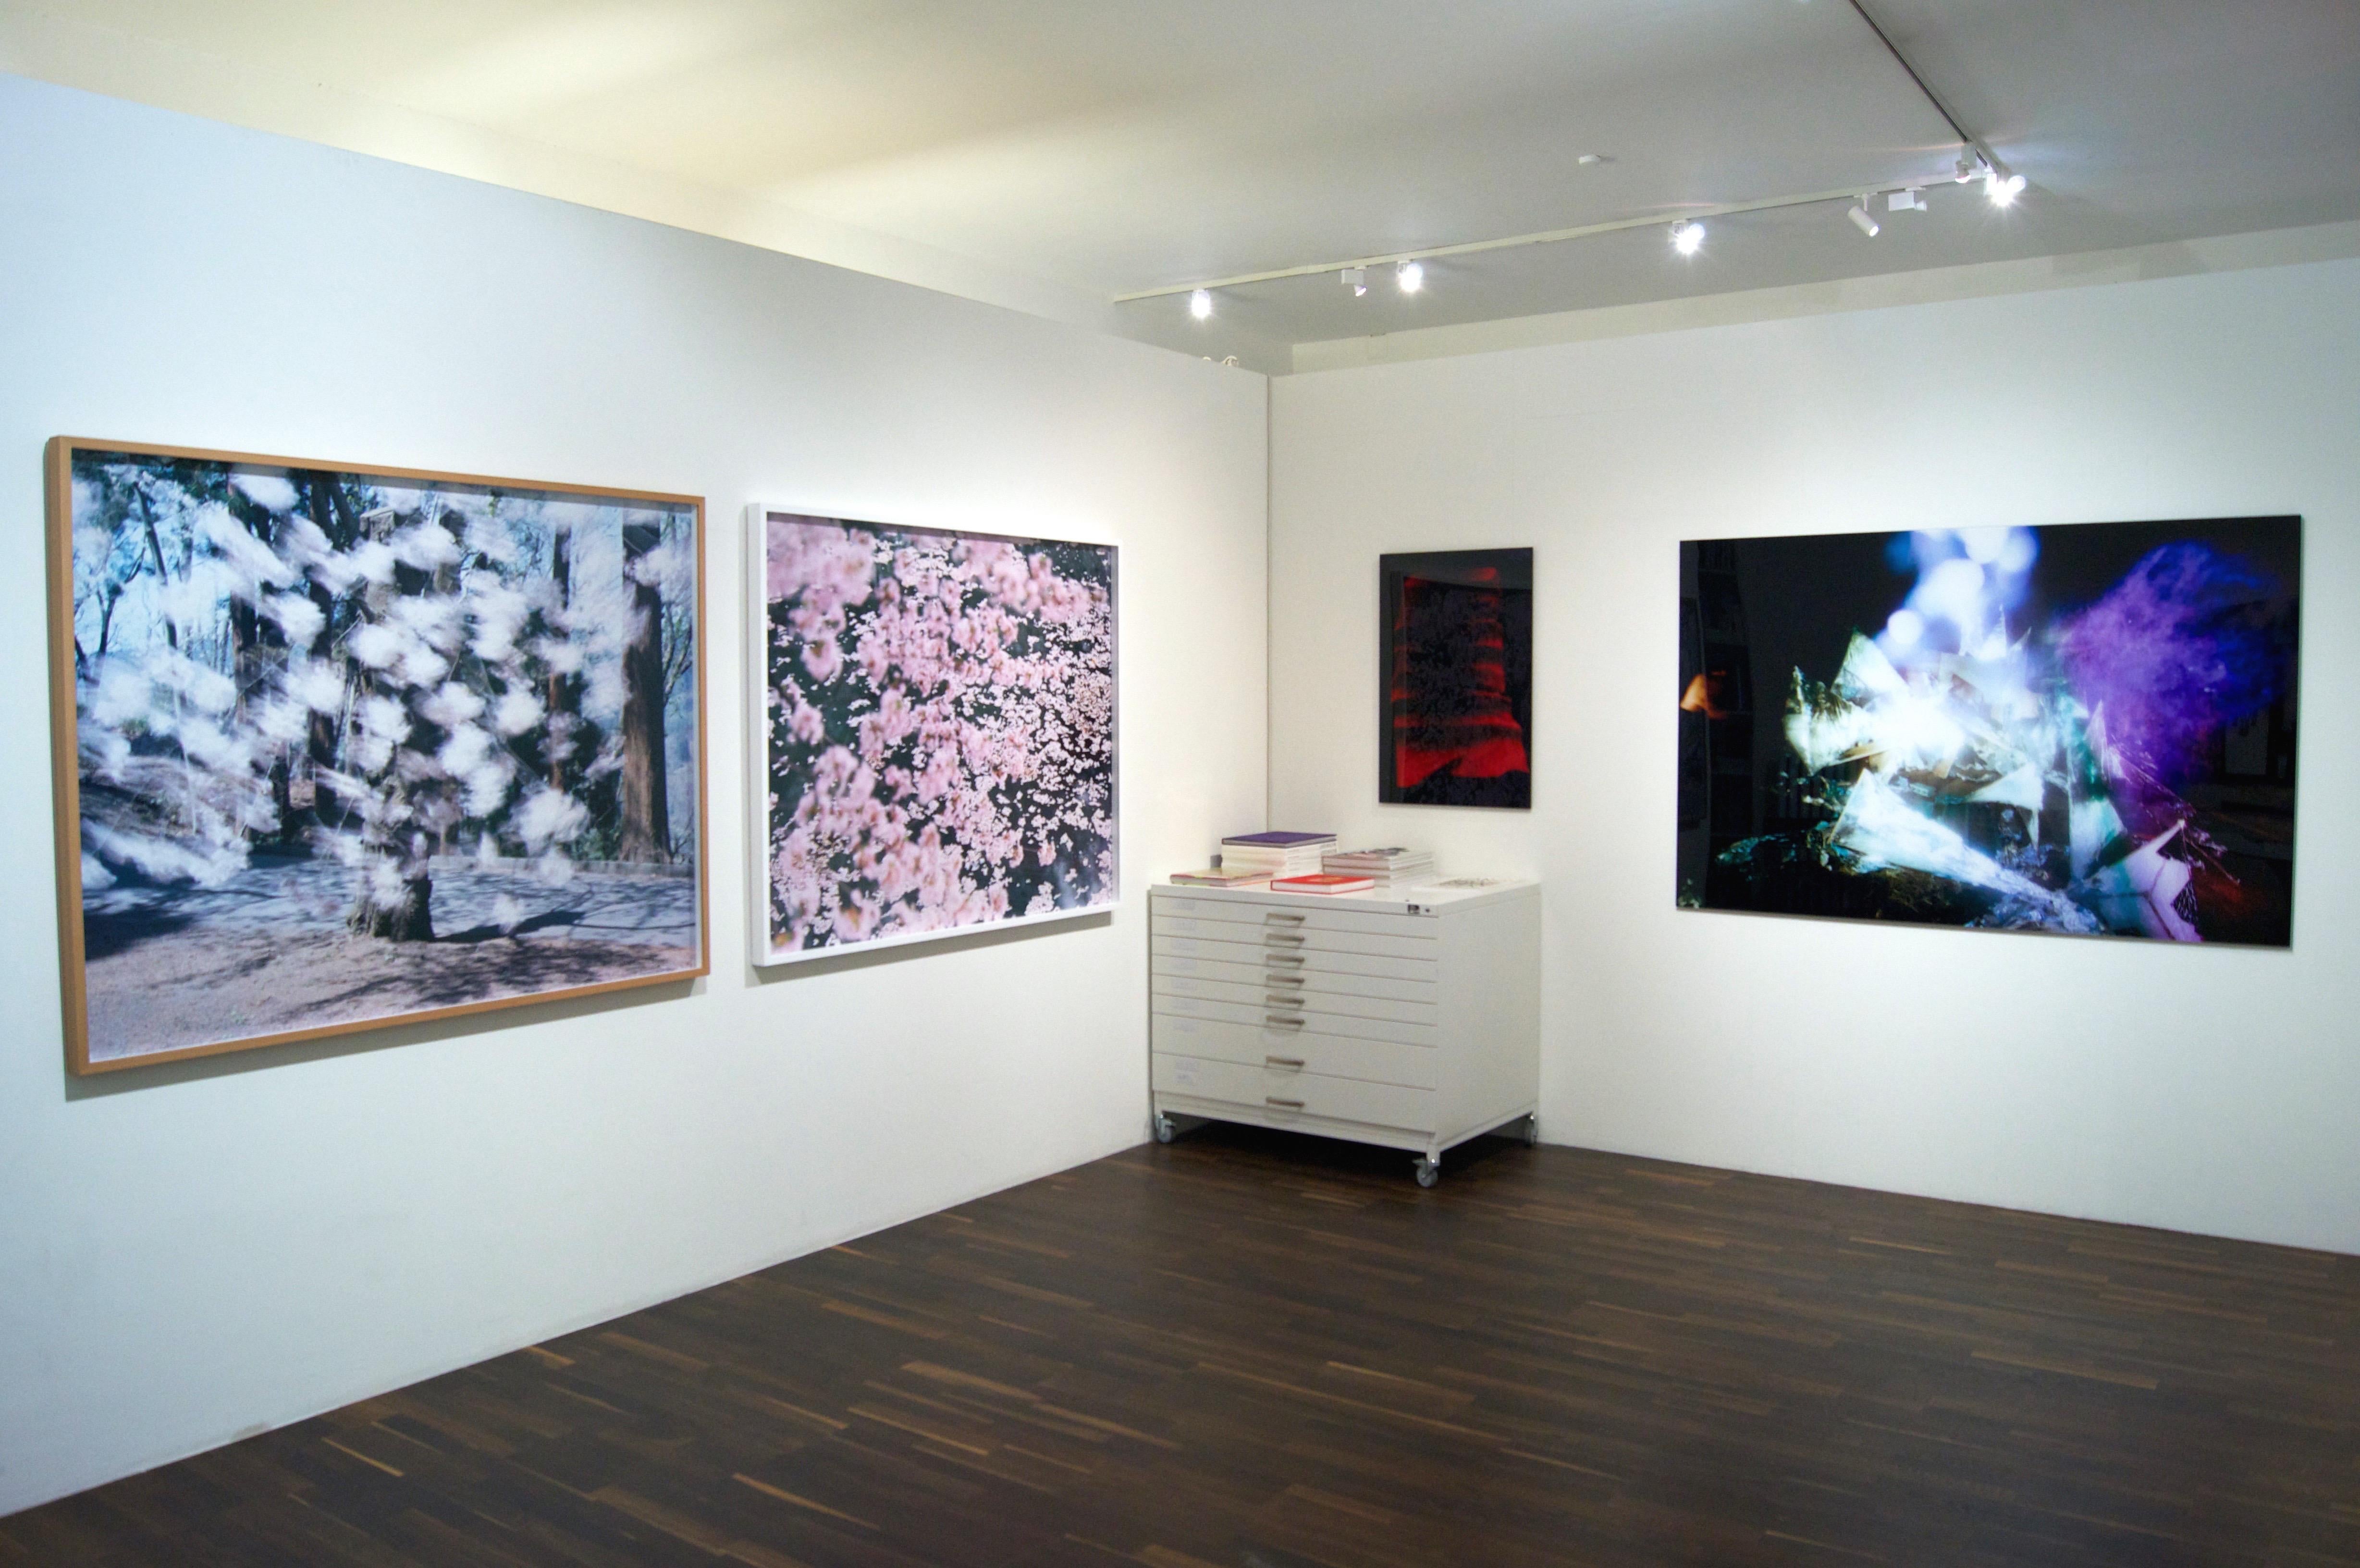 SAKURA 16, 4-11 - Risaku Suzuki, Nature, Arbre, Ciel, Printemps, Cerisier en fleur, Art en vente 5